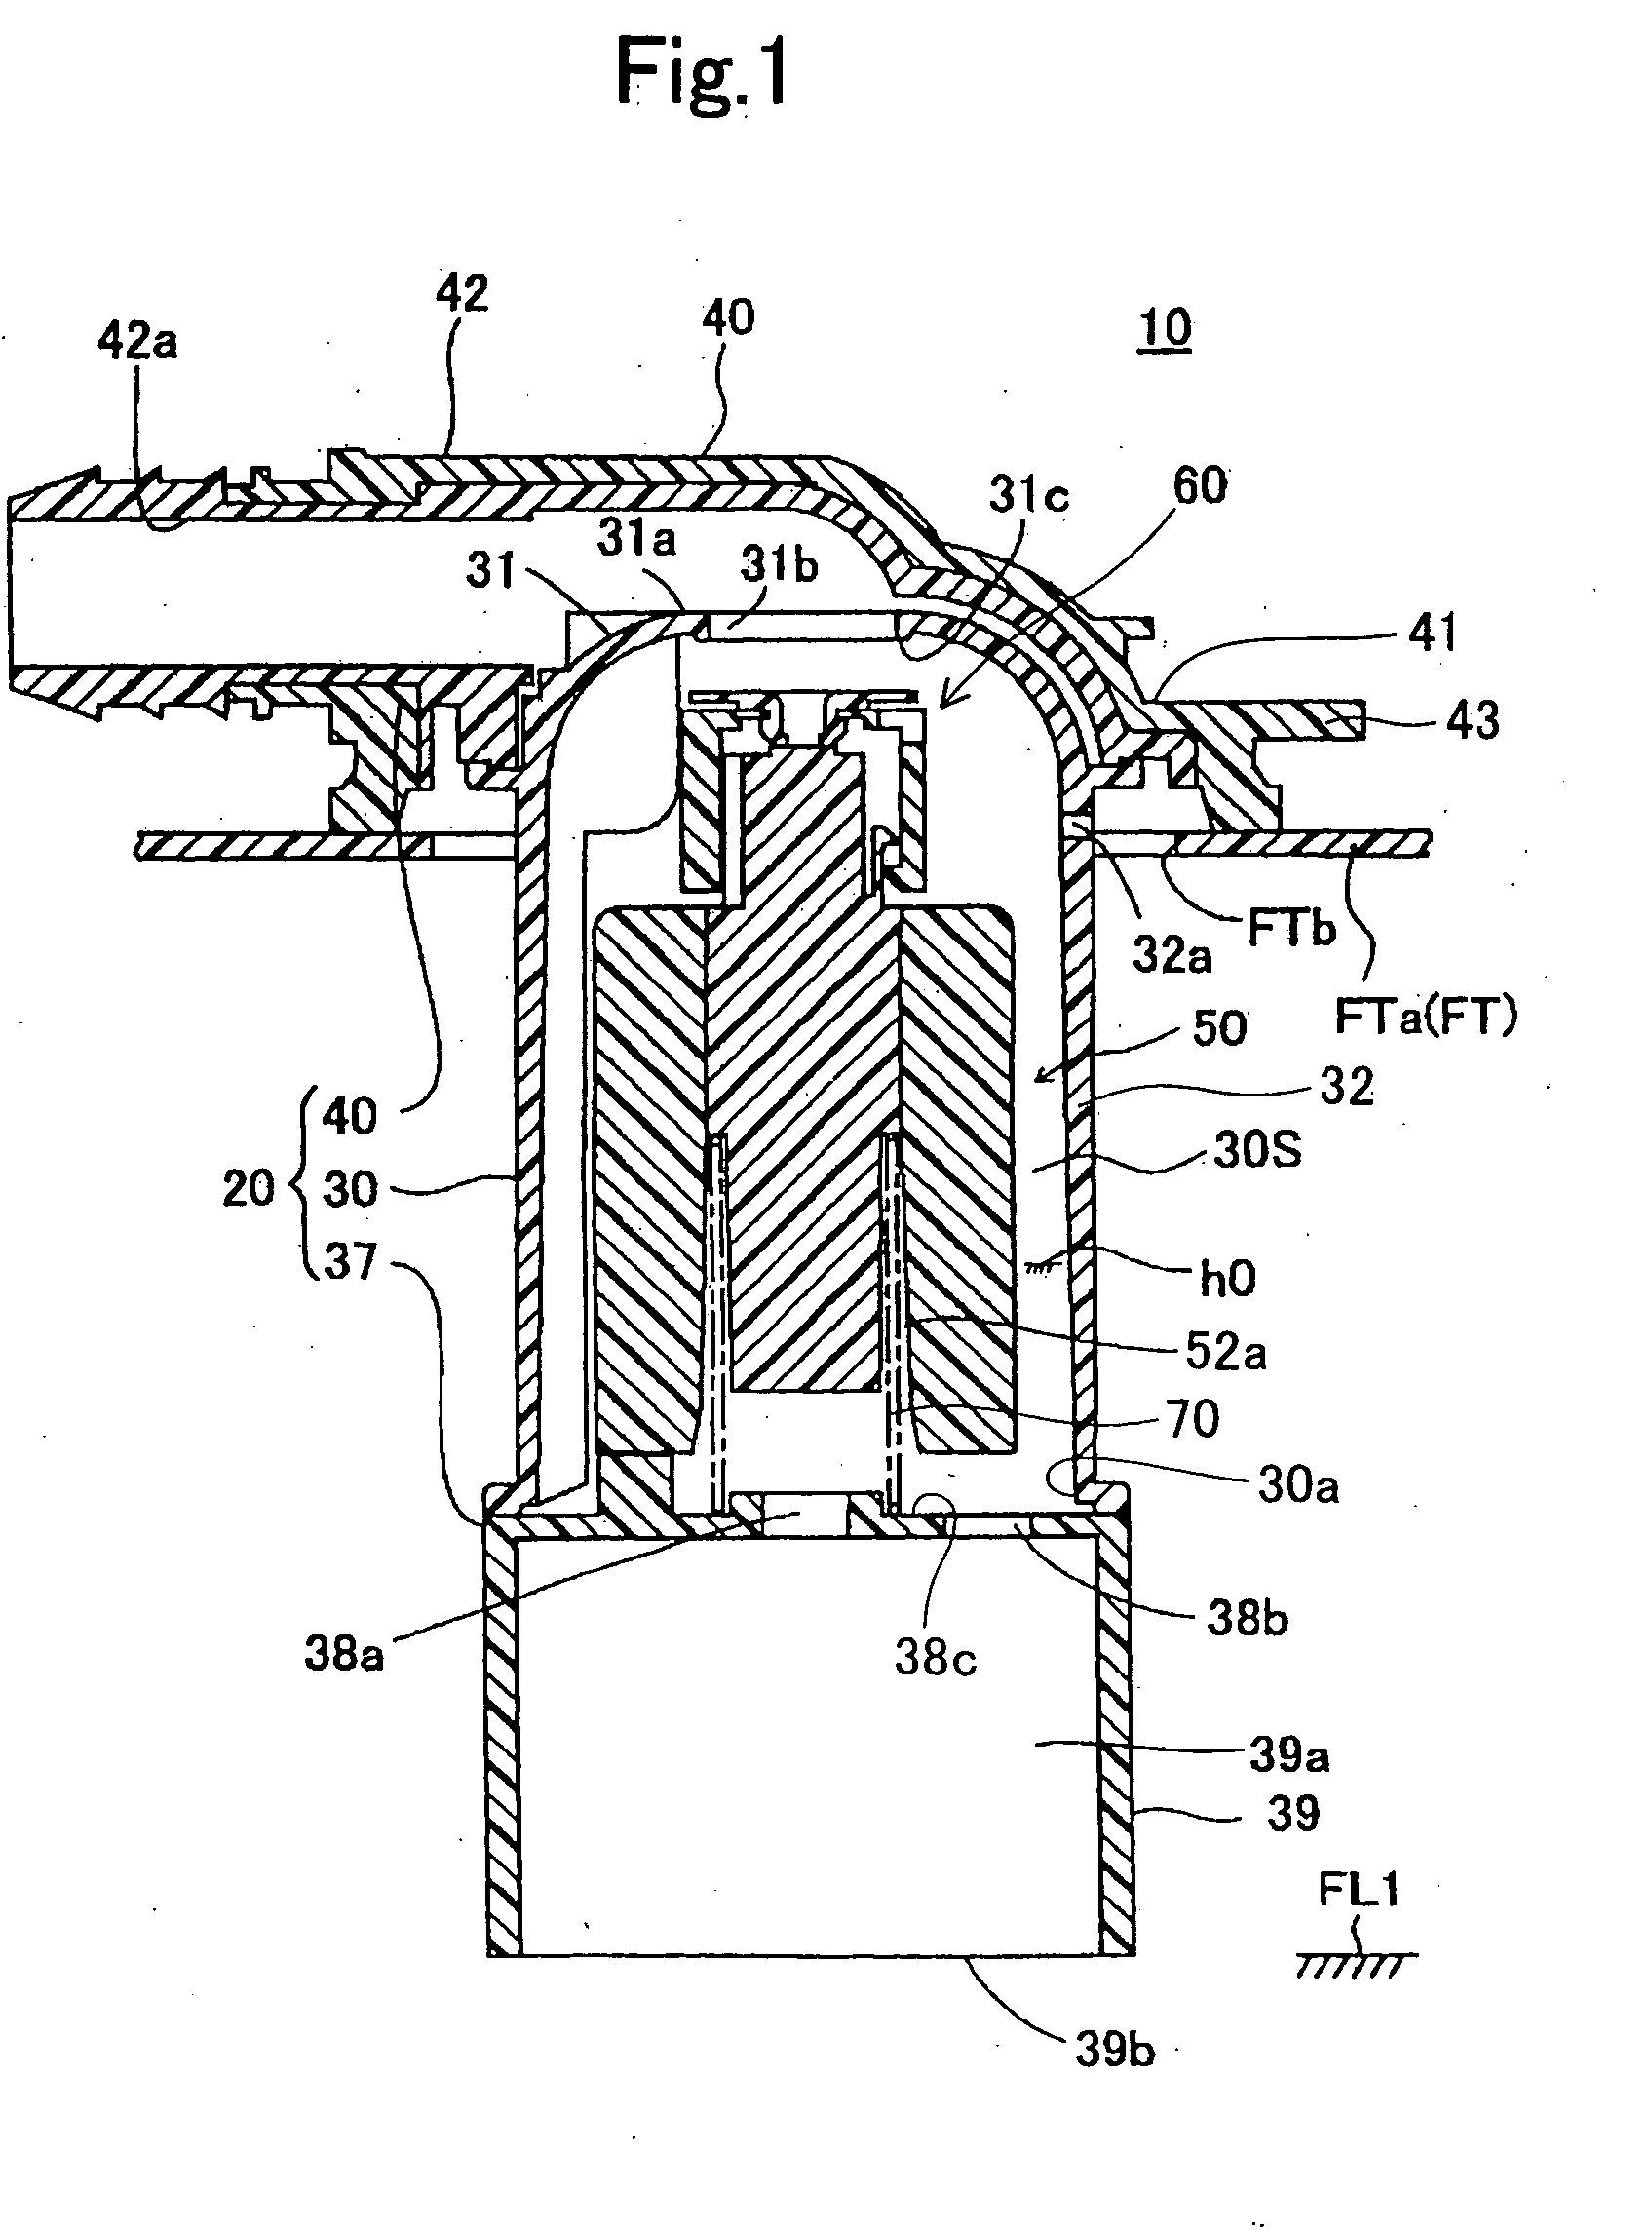 Fuel shut-off valve